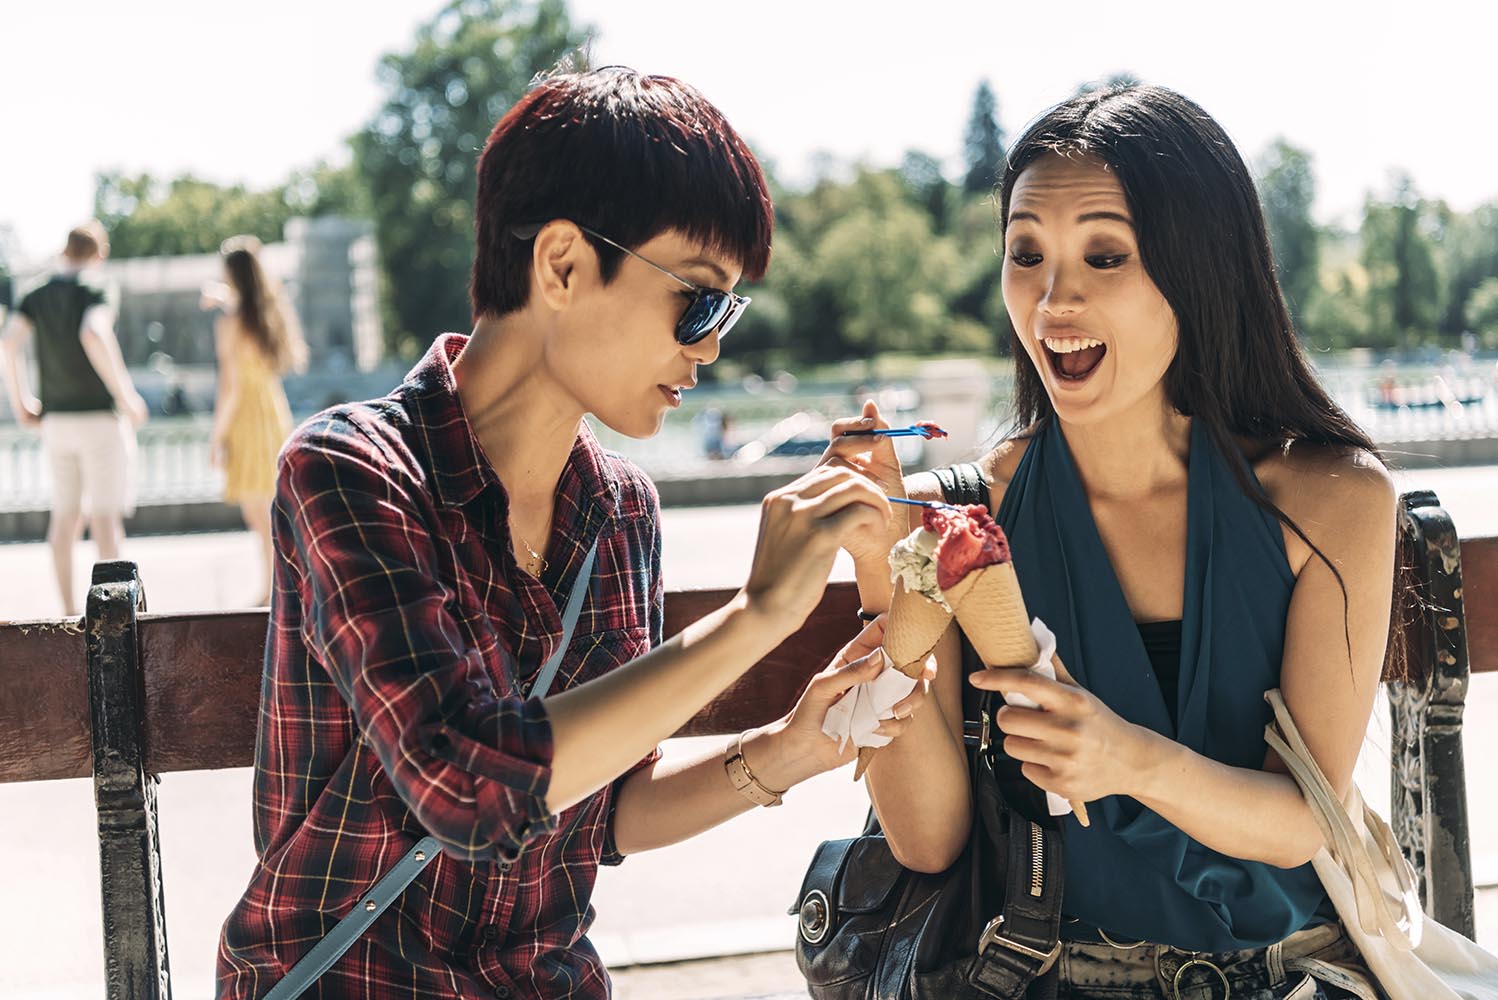 Asian women eating ice cream on park bench